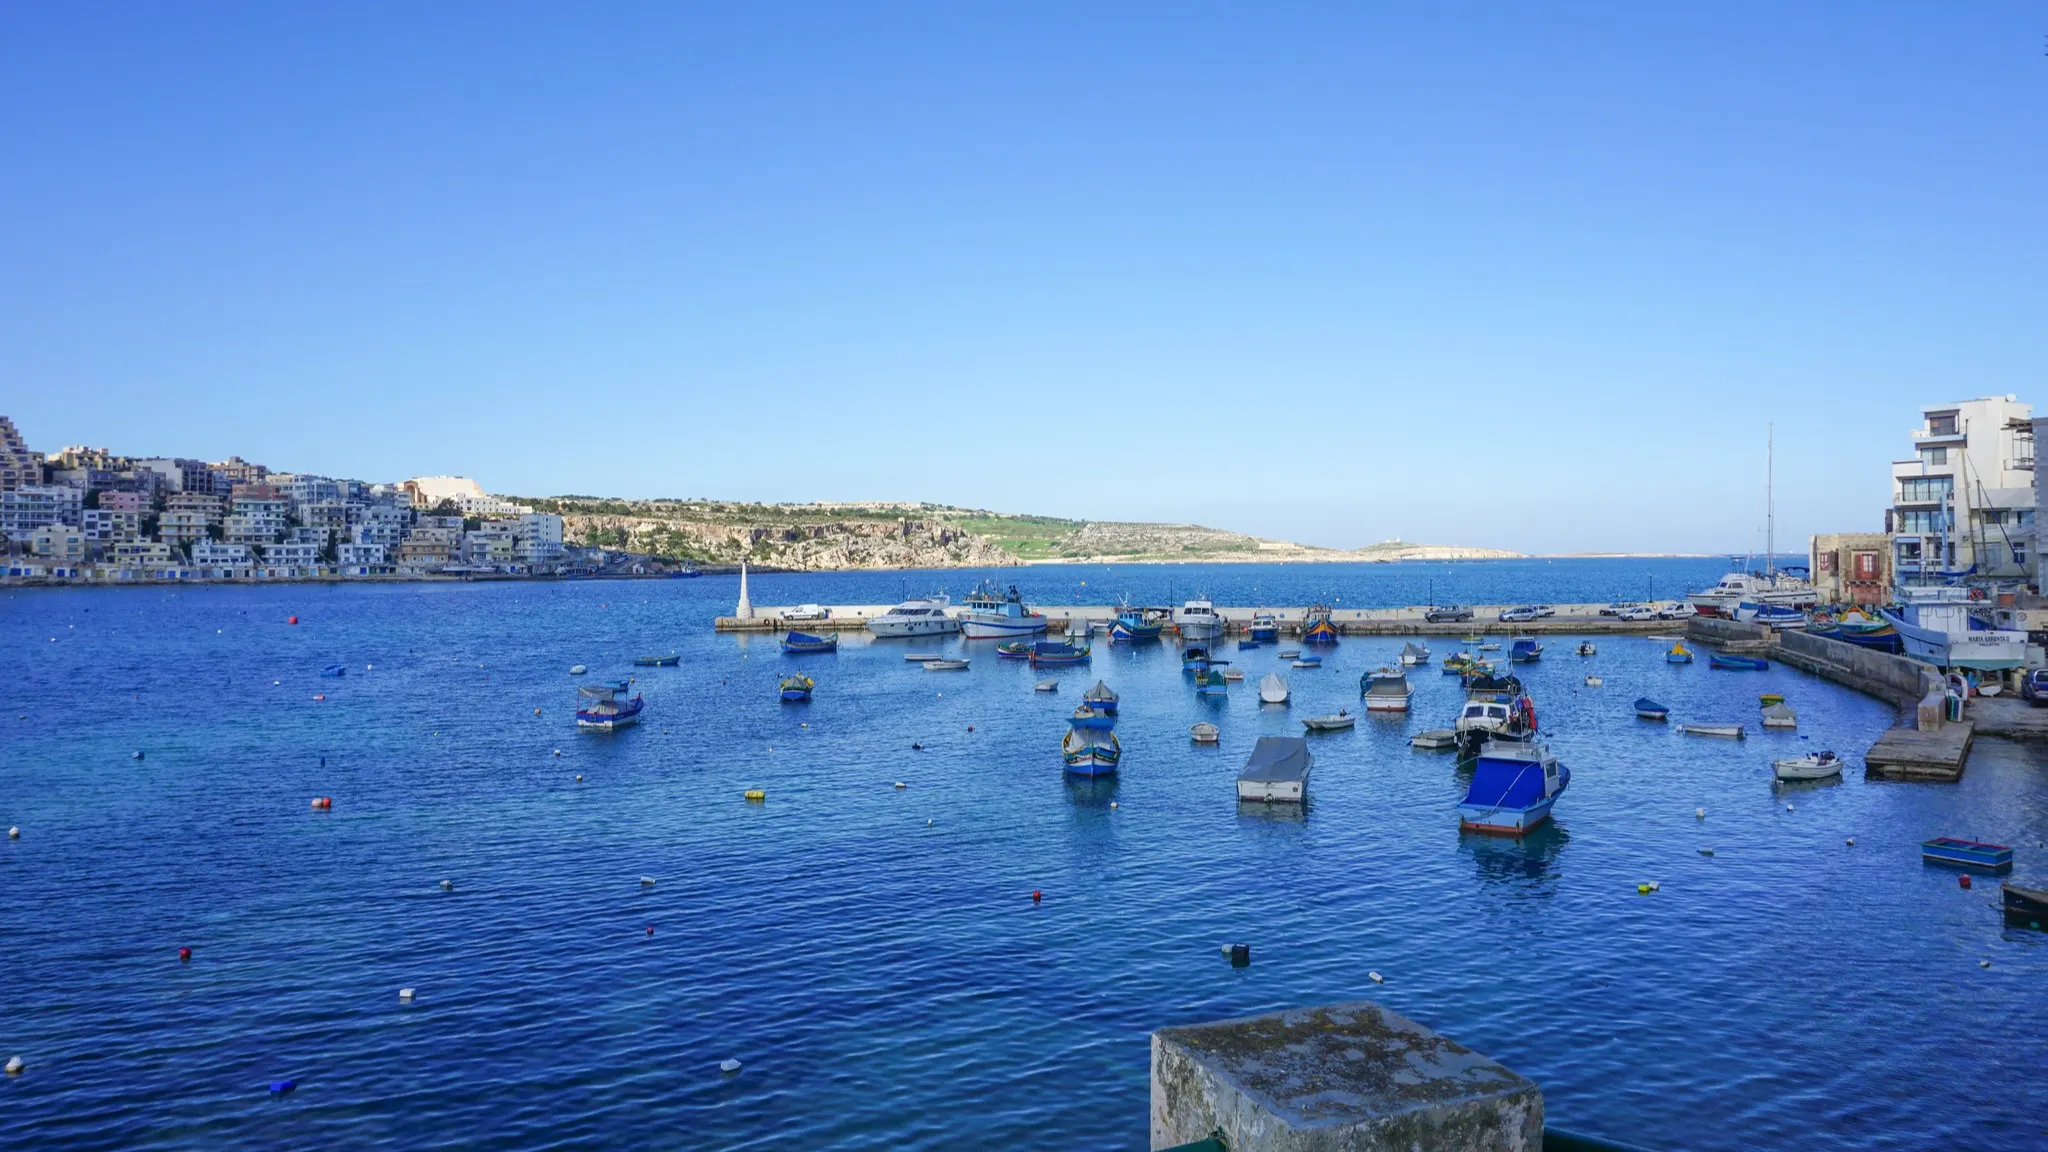 St. Paul's Bay, Malta